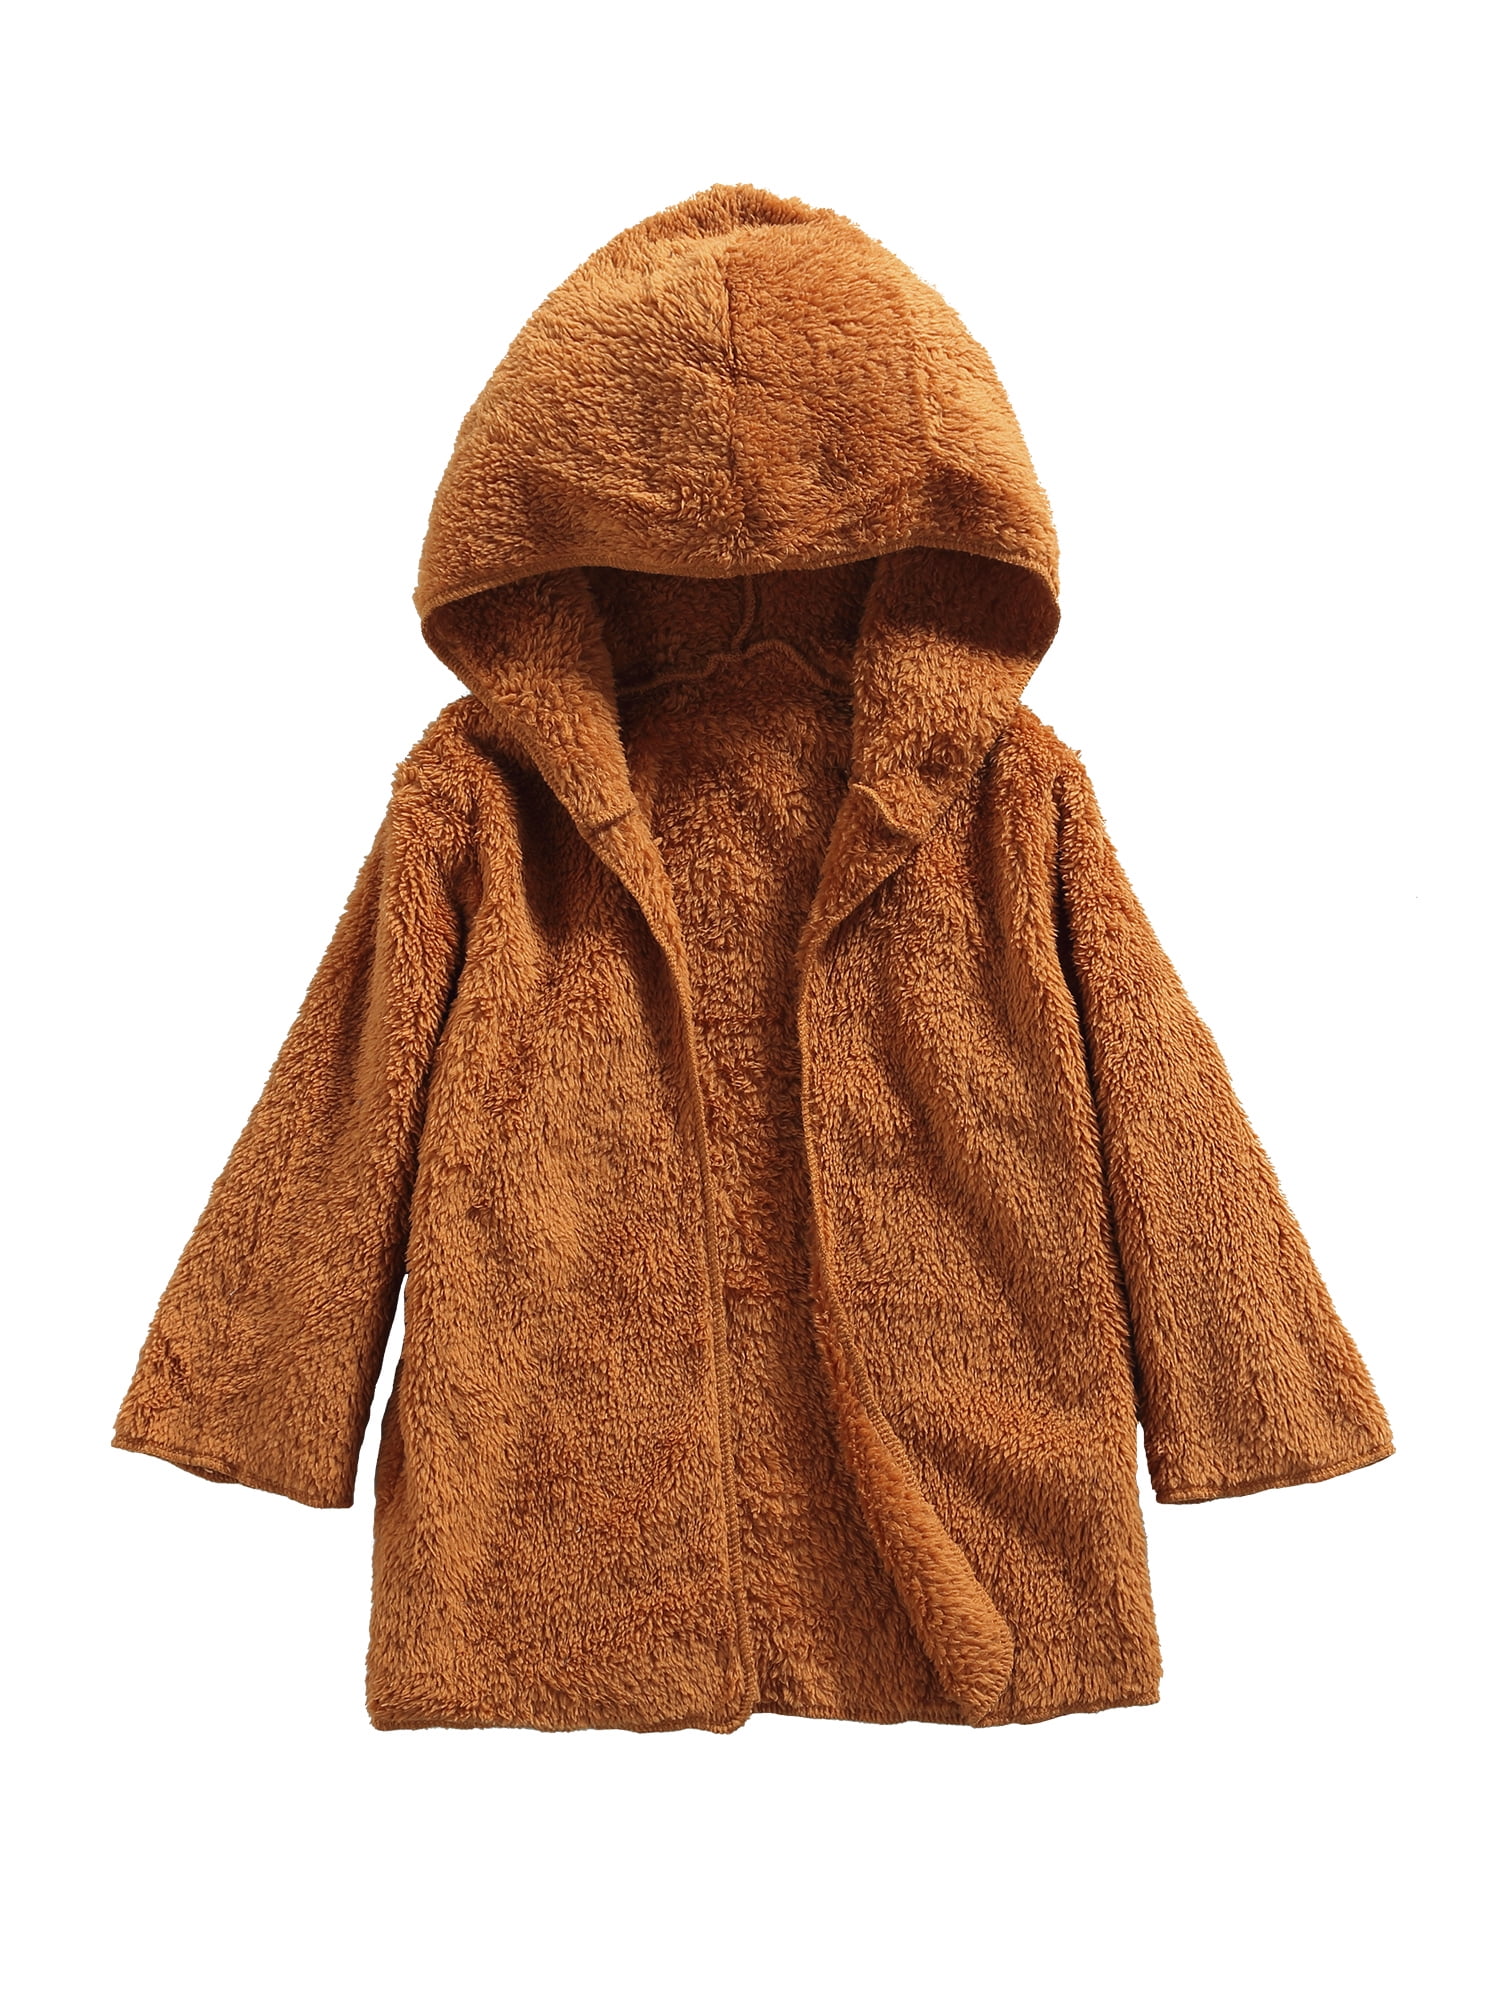 Kids Corduroy Jacket Boys Girls Sherpa Fleece Lined Coats Plush Quilted Outerwear Lapel Button Down Overcoat